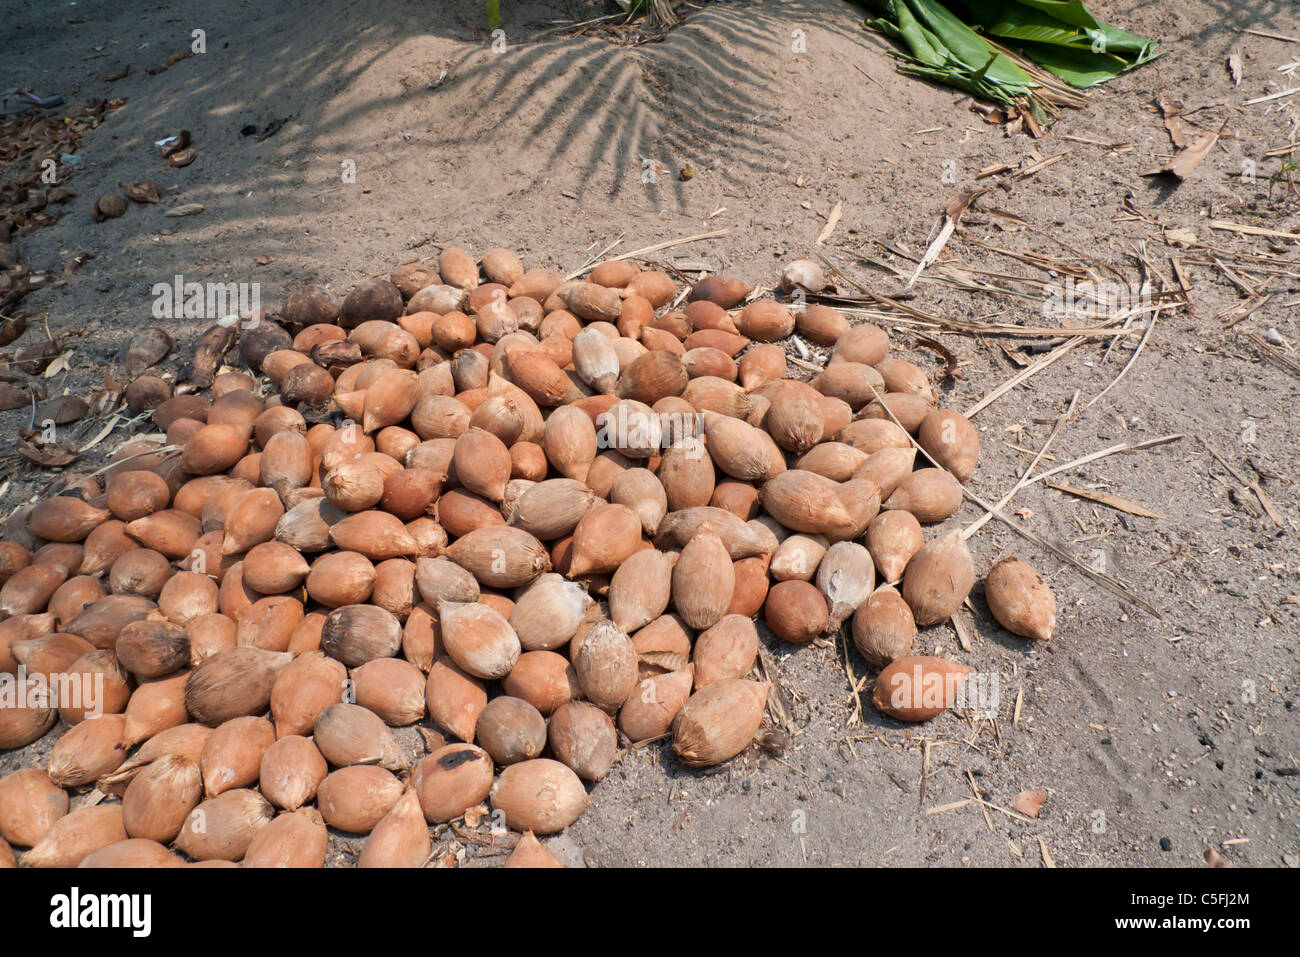 Aldeia Baú, Para State, Brazil. Babassu nuts drying in the sun. Stock Photo